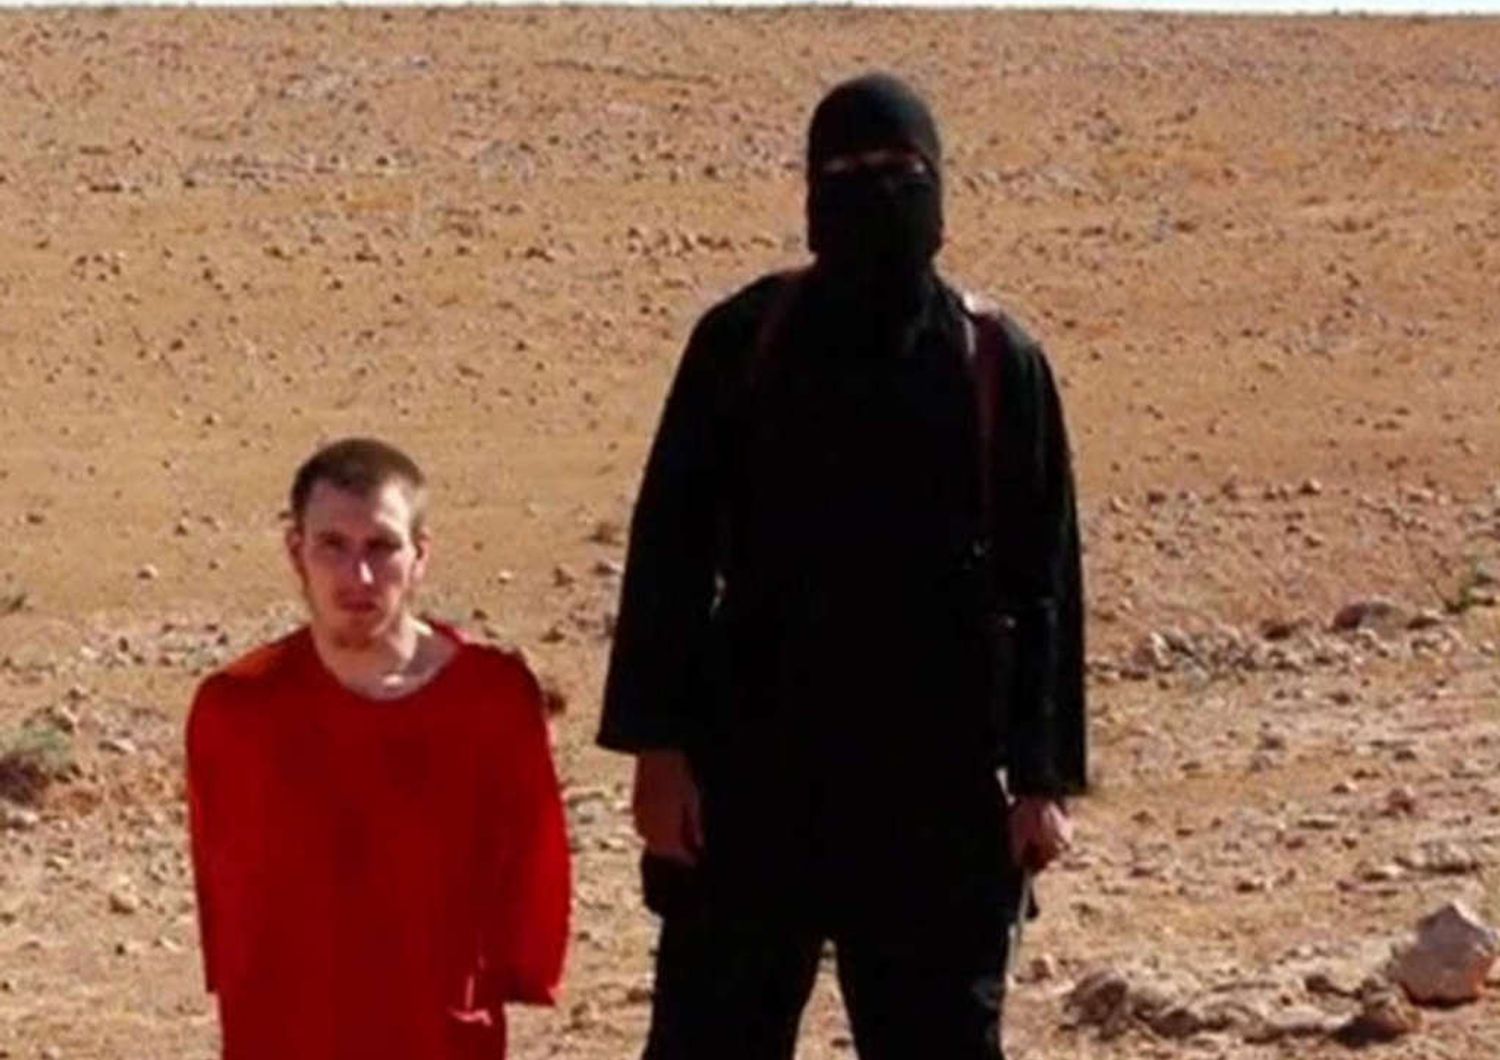 L'Isis decapita ostaggio UsaKassig si era convertito a Islam